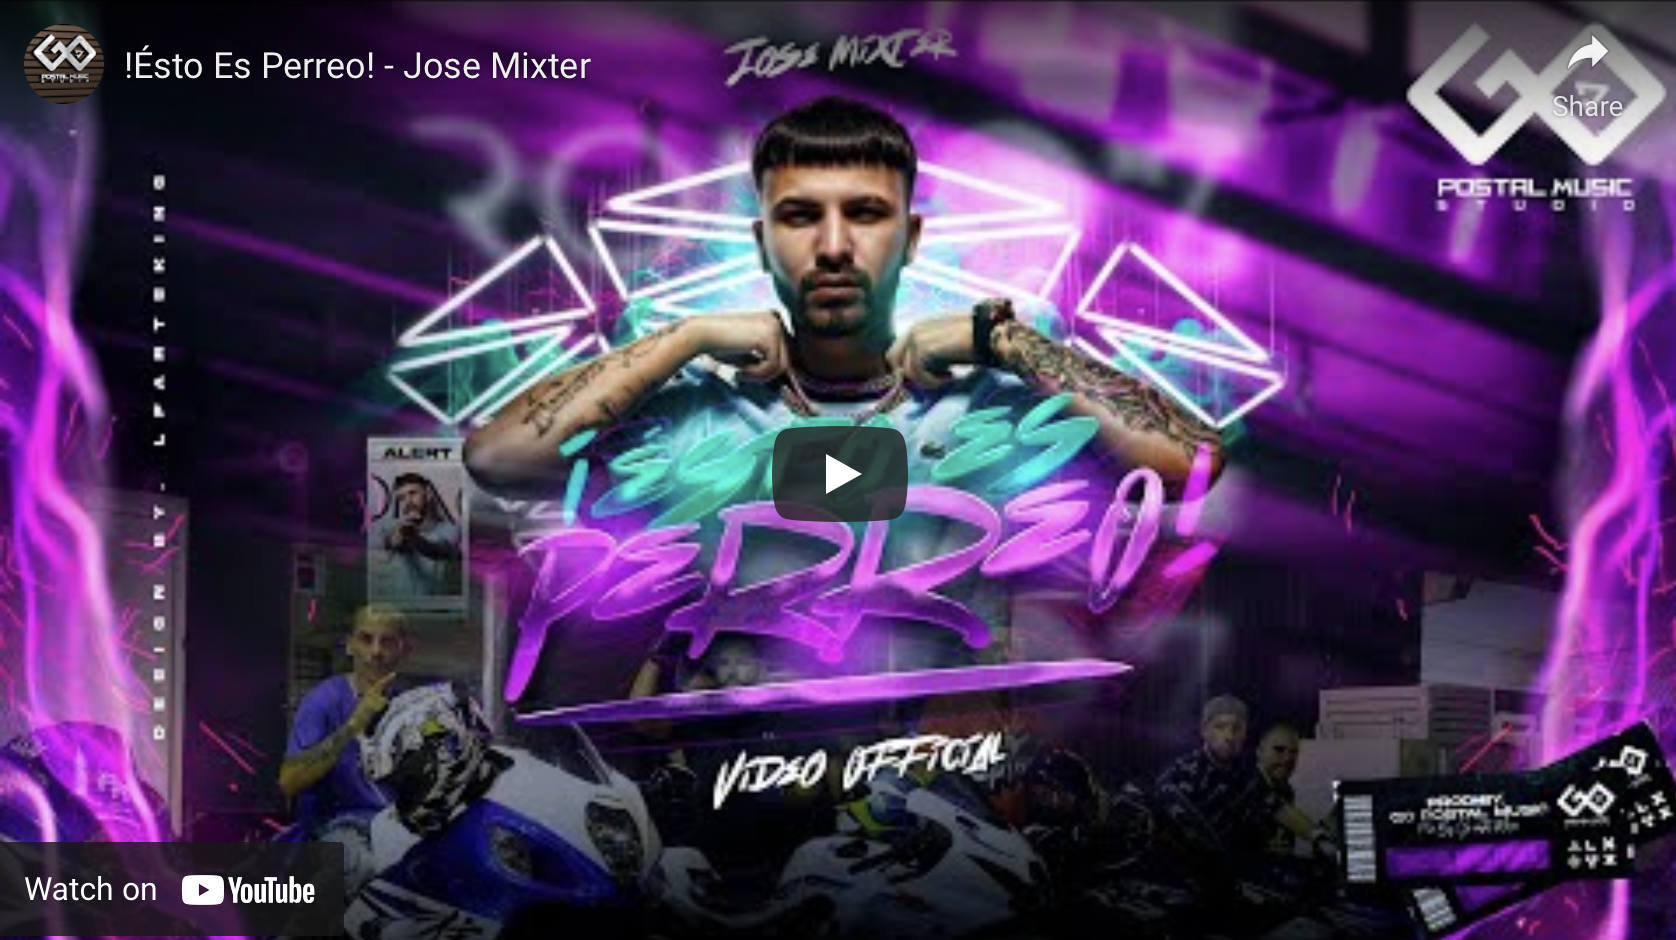 !Ésto Es Perreo! – Jose Mixter (Music video)